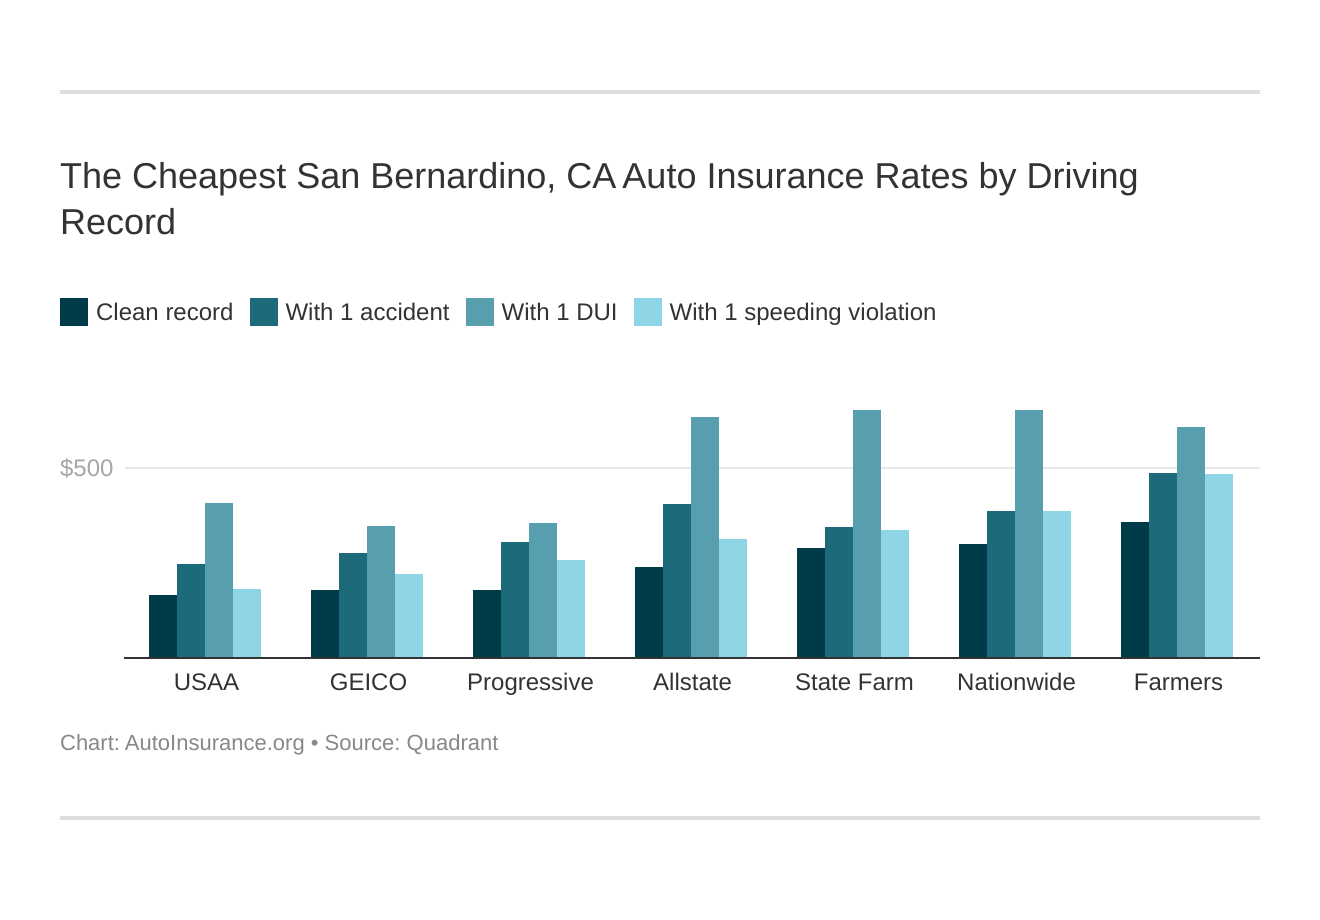 The Cheapest San Bernardino, CA Auto Insurance Rates by Driving Record